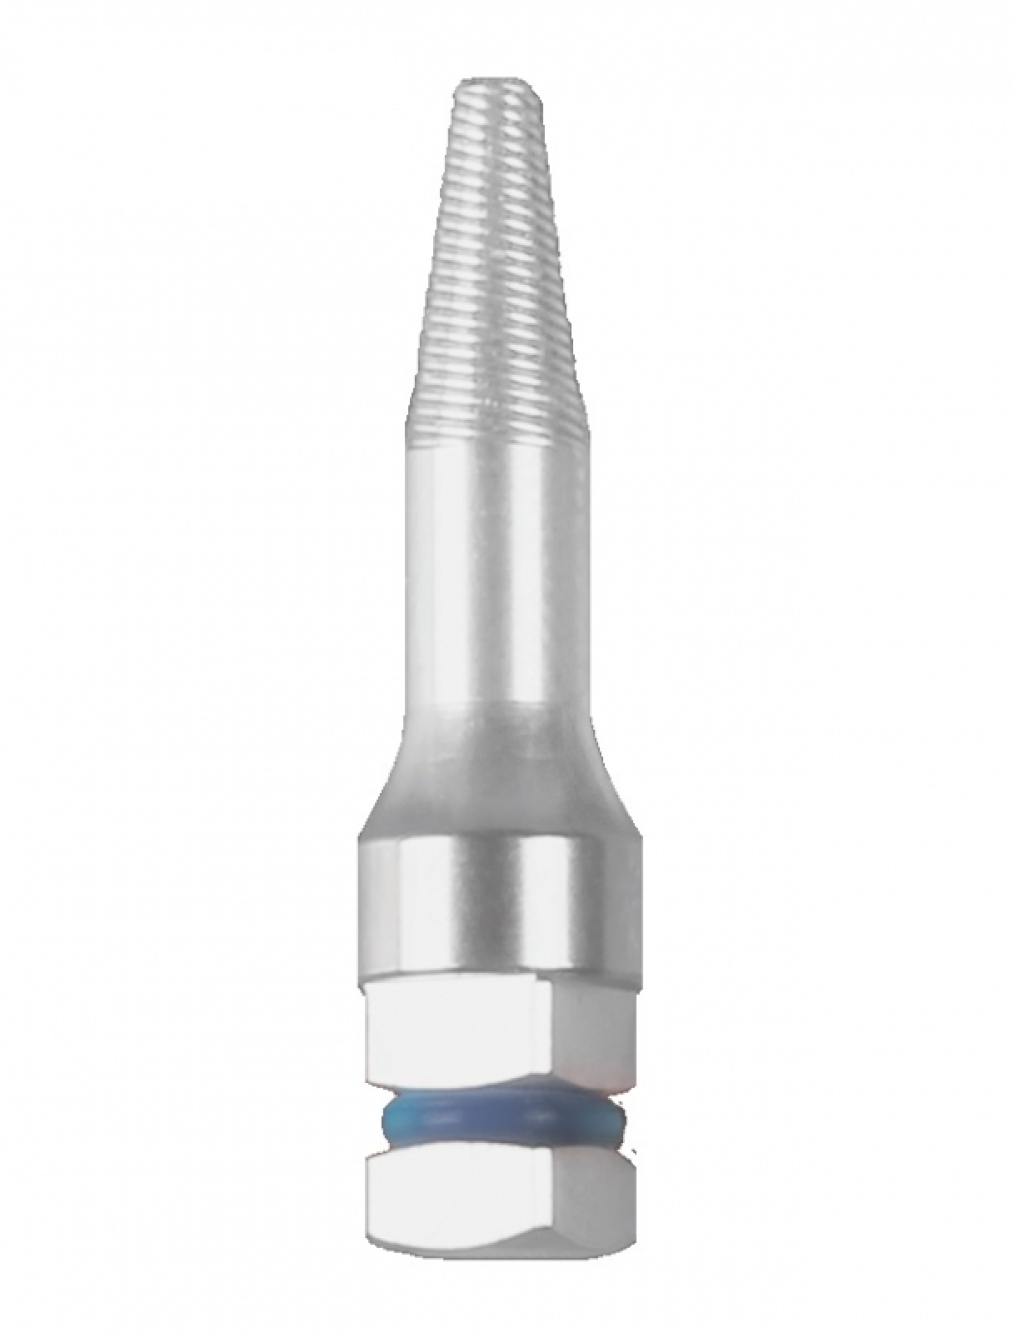 FRD-02 Стоматологический экстрактор имплантата, диаметр 3.5 мм, Mr.Curette Tech, Южная Корея